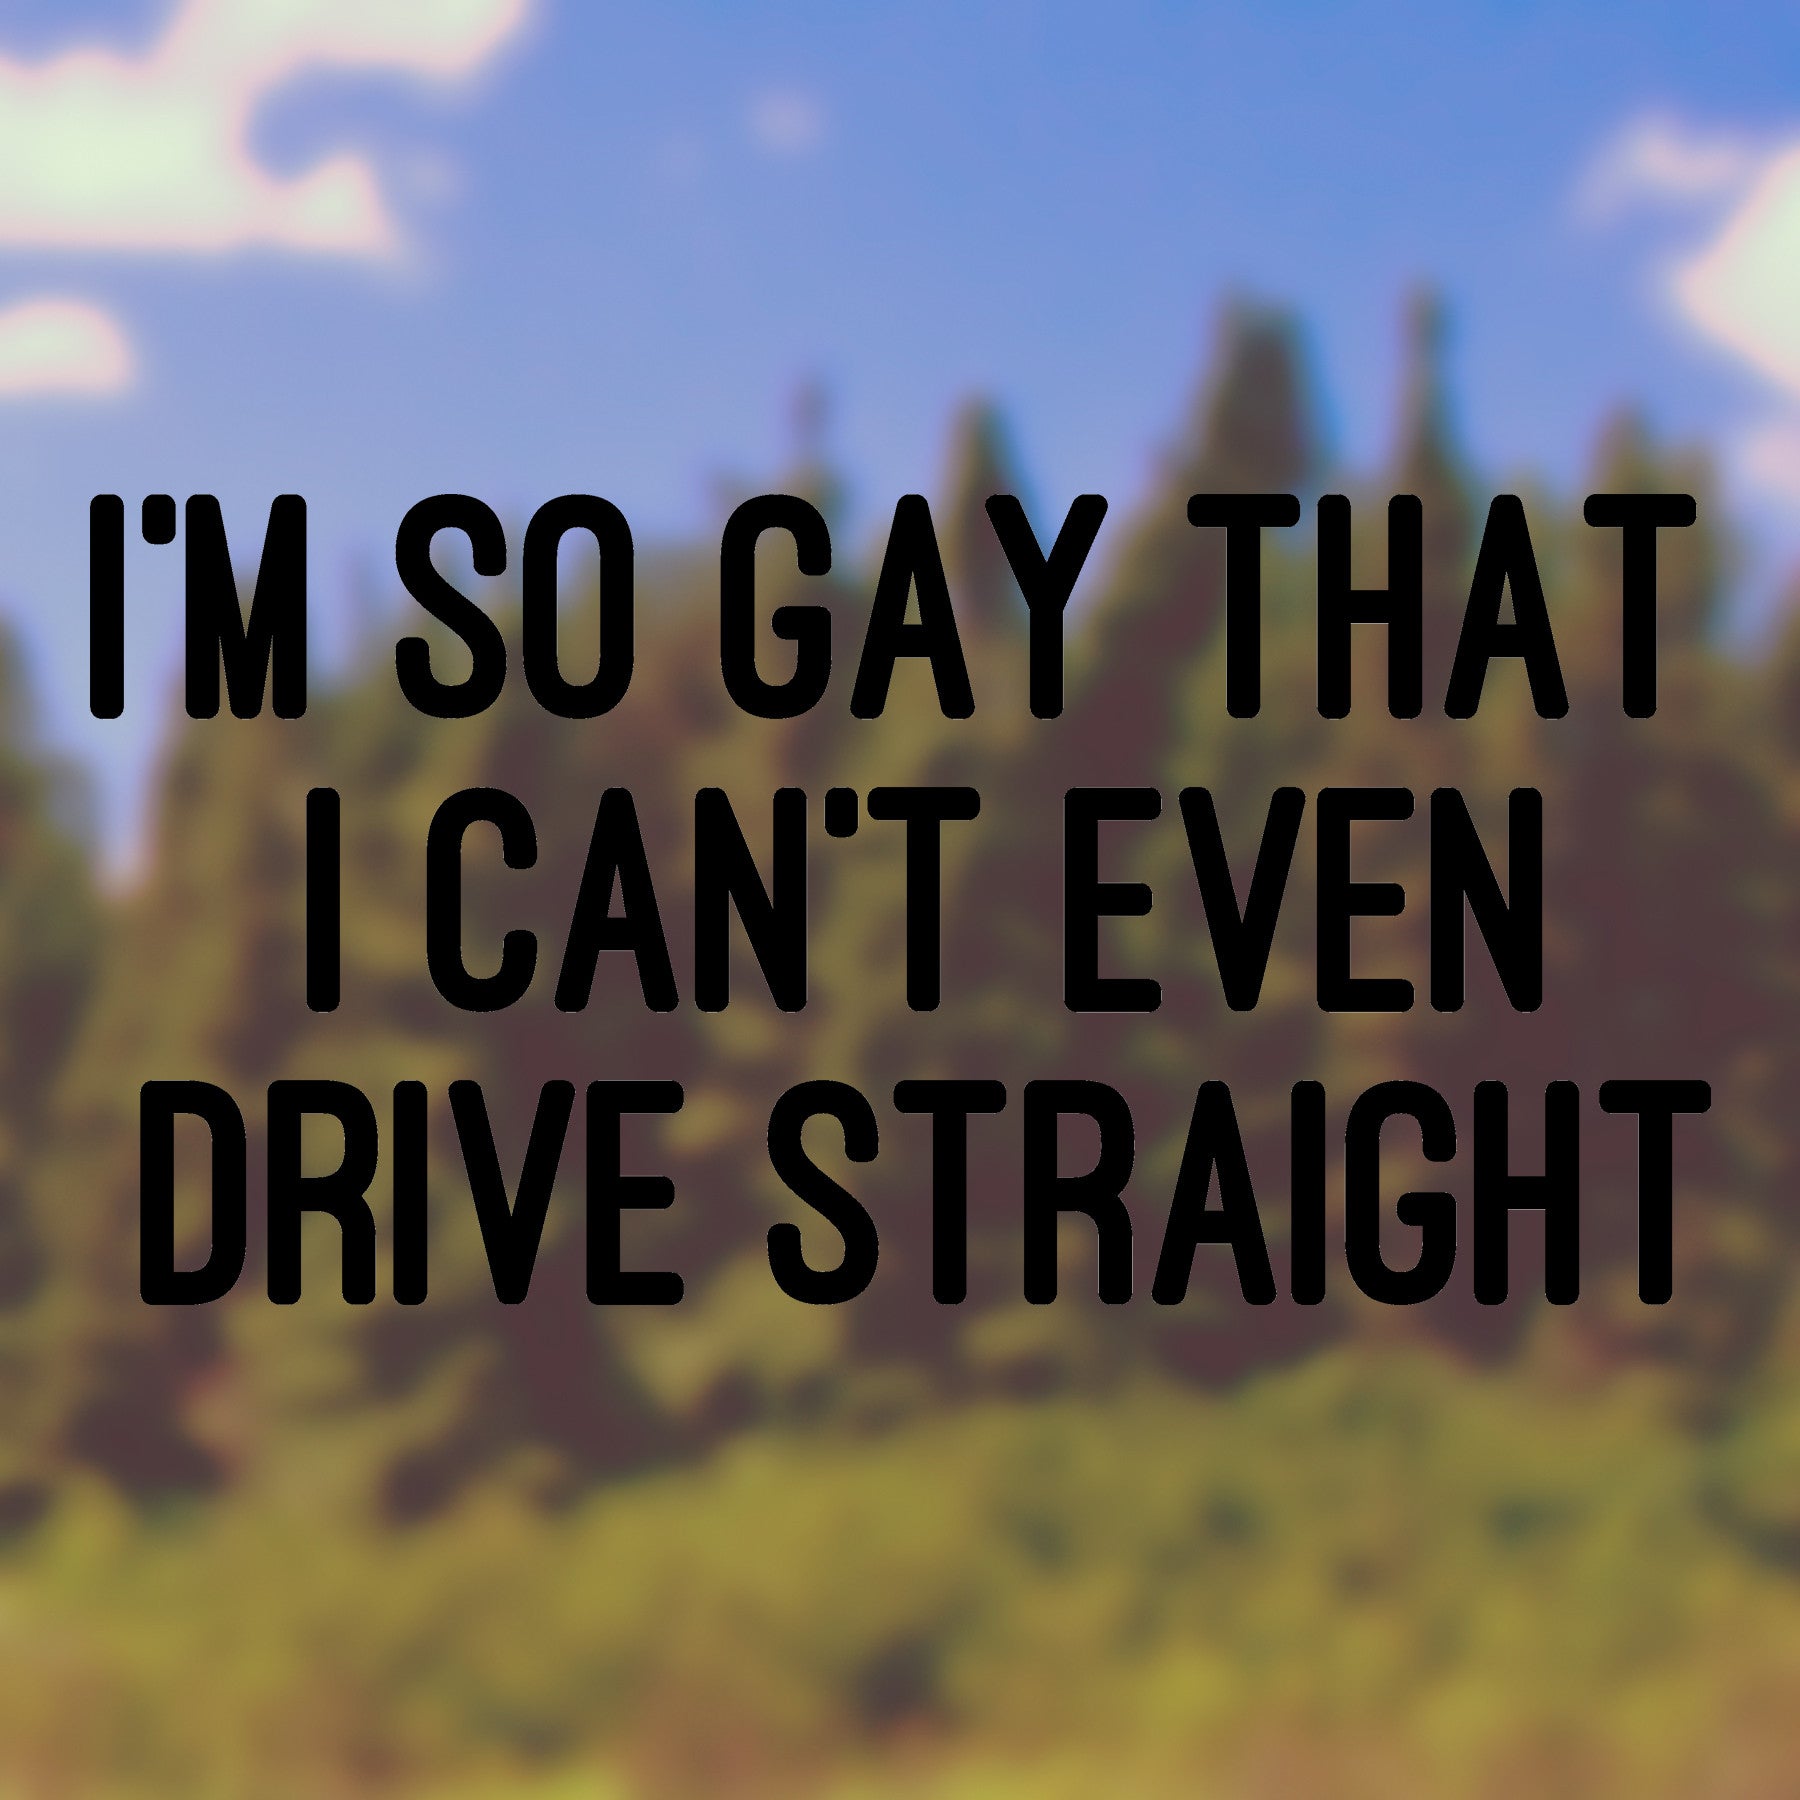 I'm so gay, I can't even drive straight | Bumper sticker - Adnil Creations